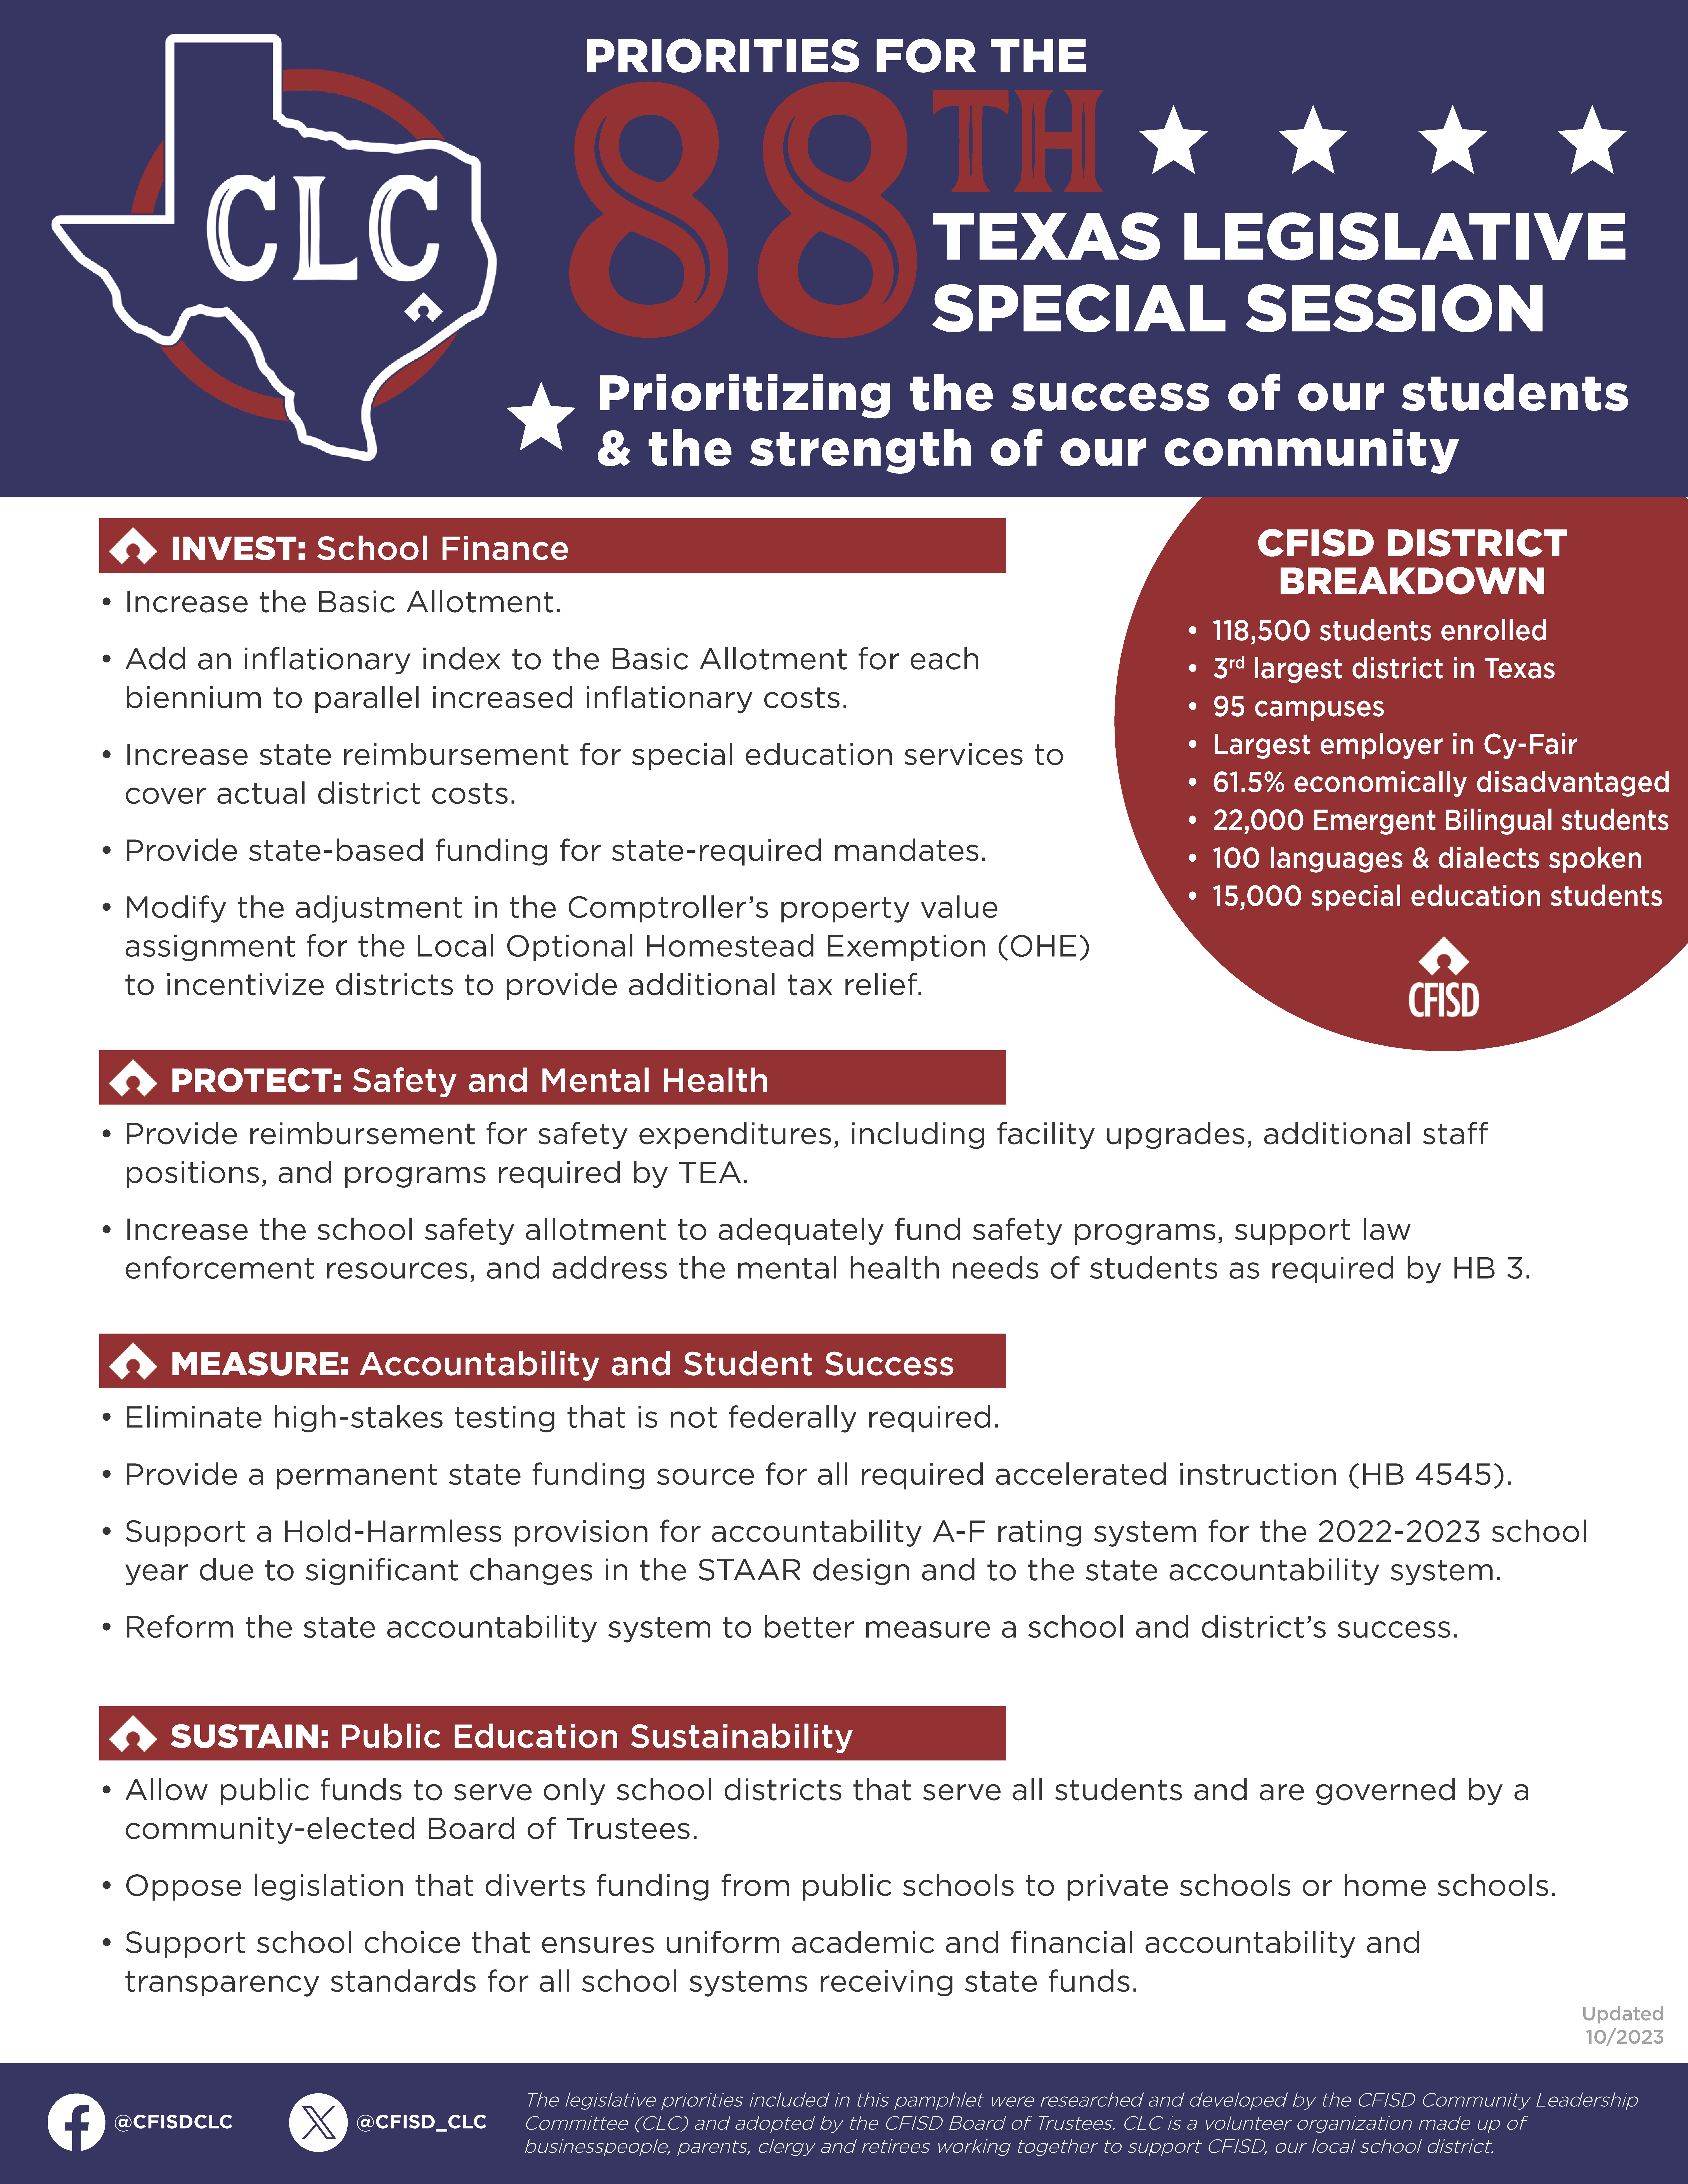 Priorities for the 88th Texas Legislative Session